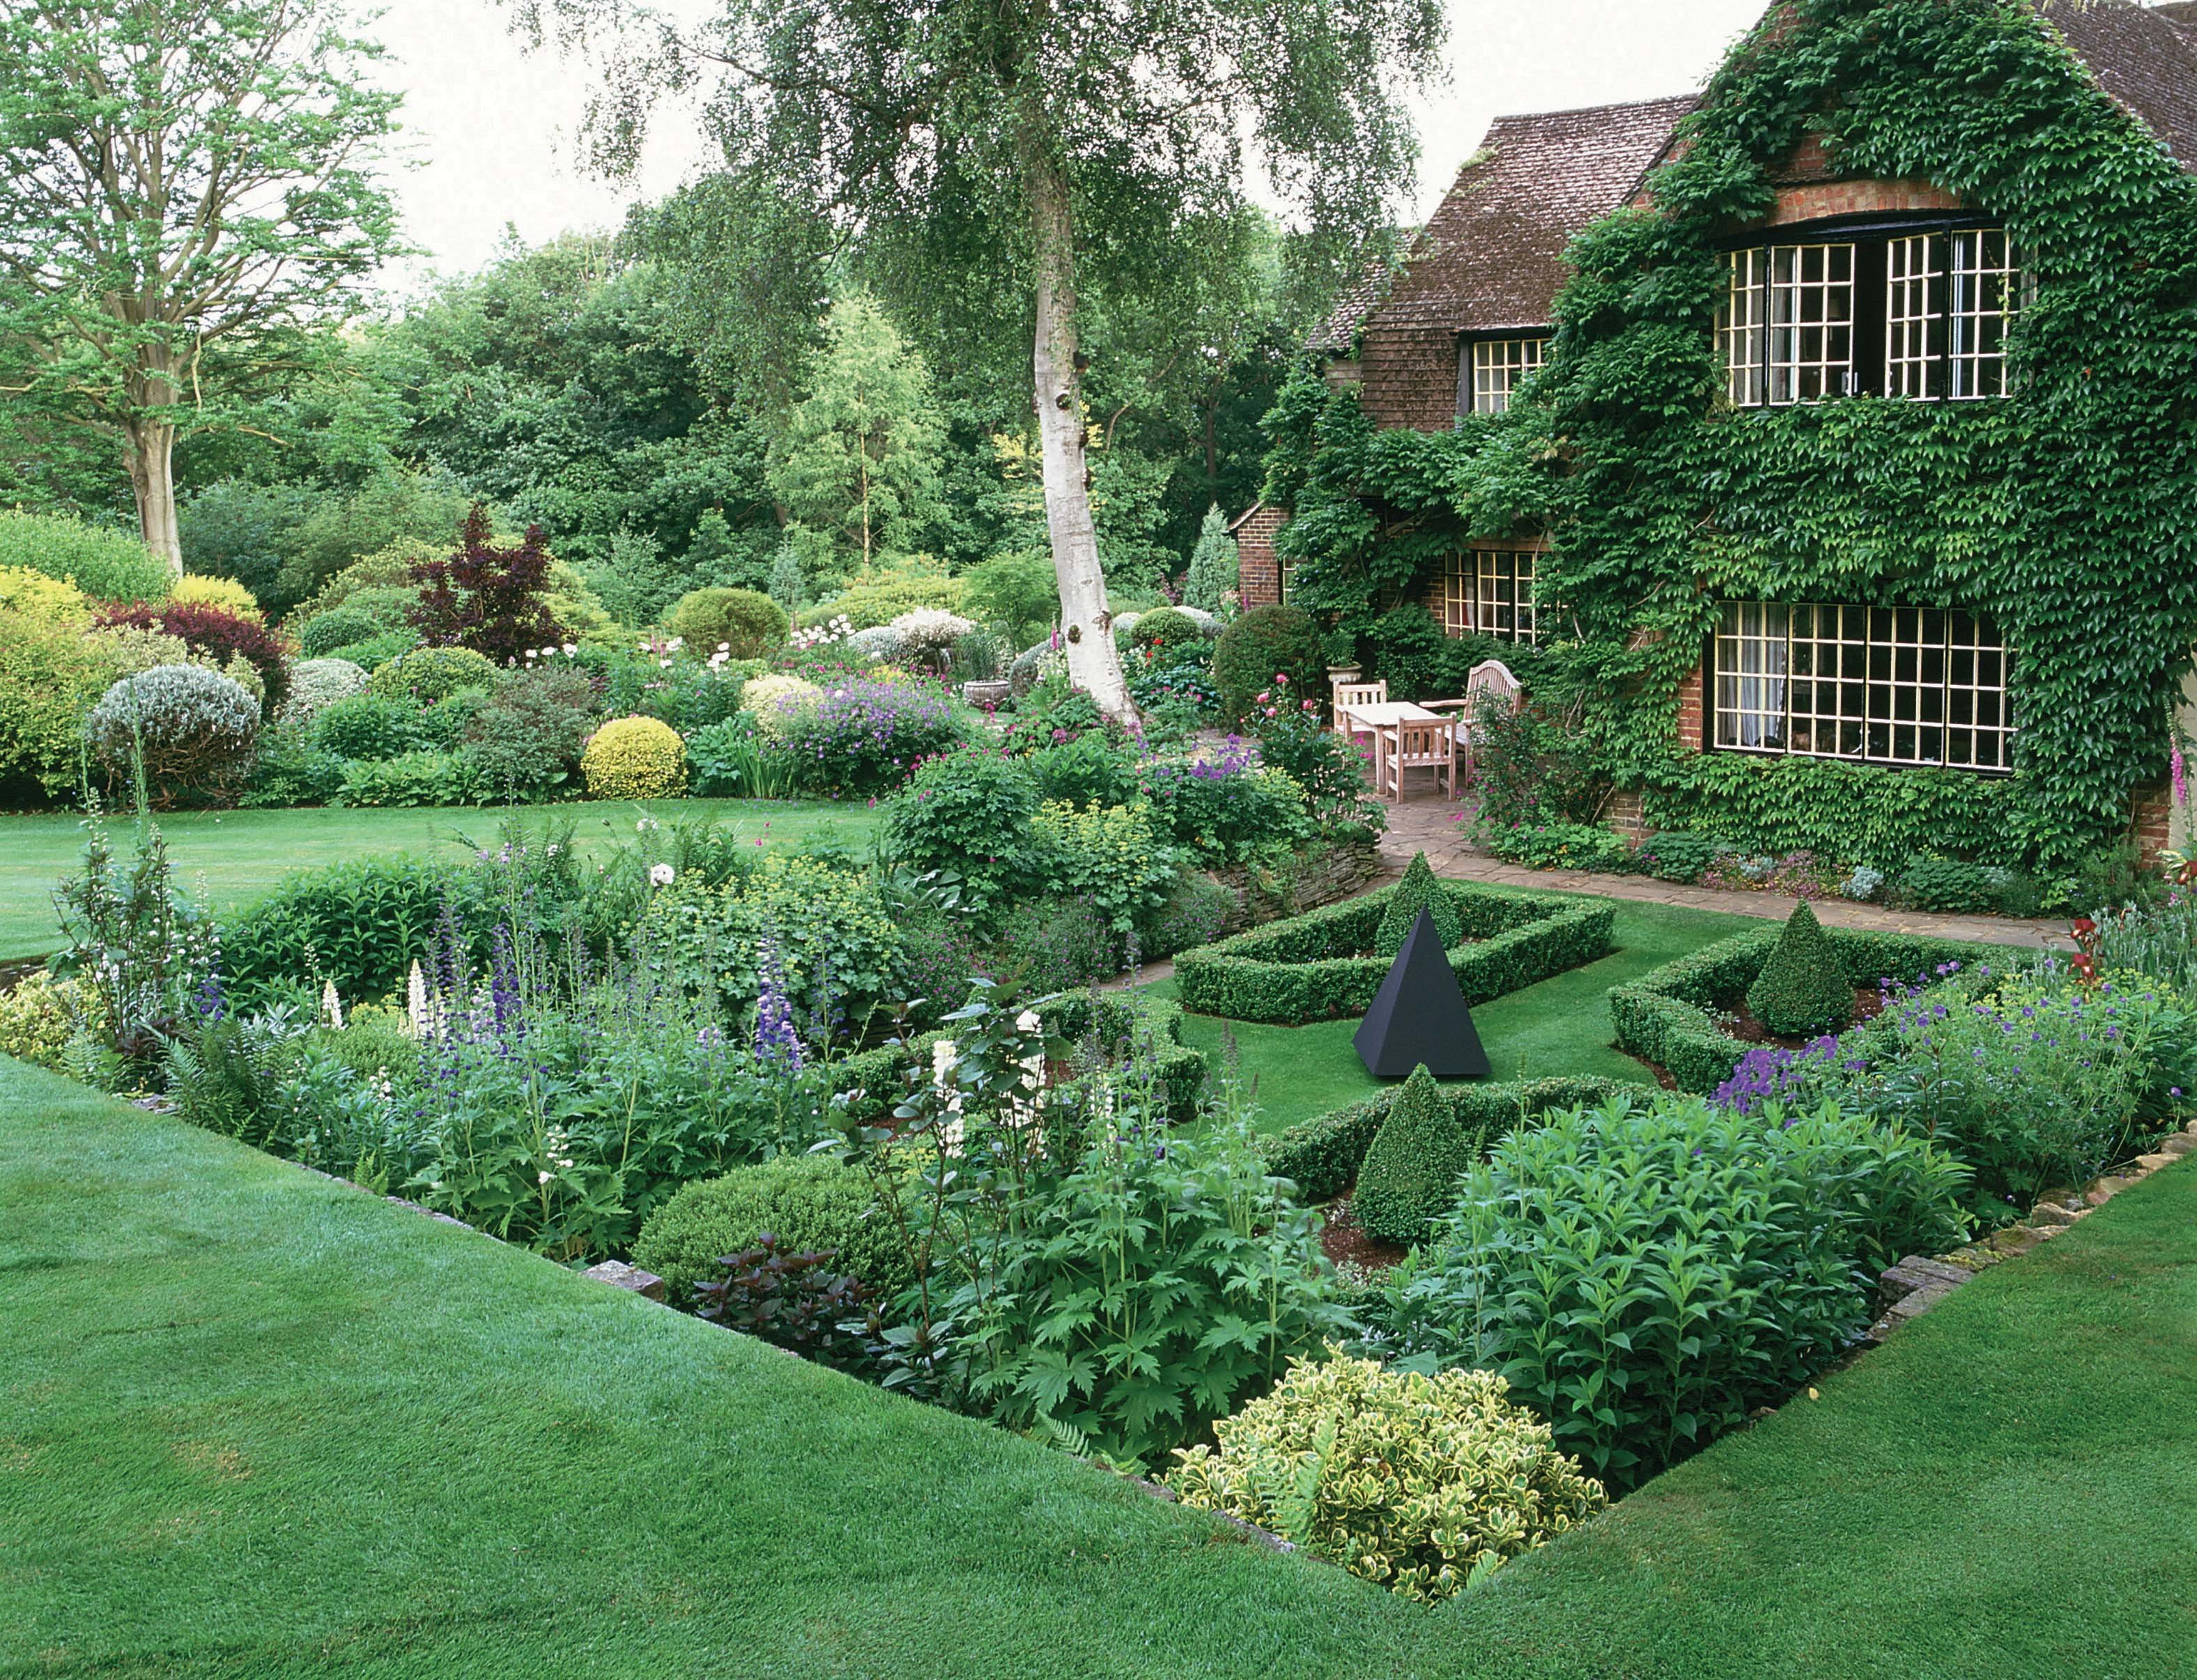 Красивый участок земли. Хелен парк+ ландшафт. Ландшафтный дизайнер Хью Гарден. Англия деревня кэмбэлфорд ланшадф садов.